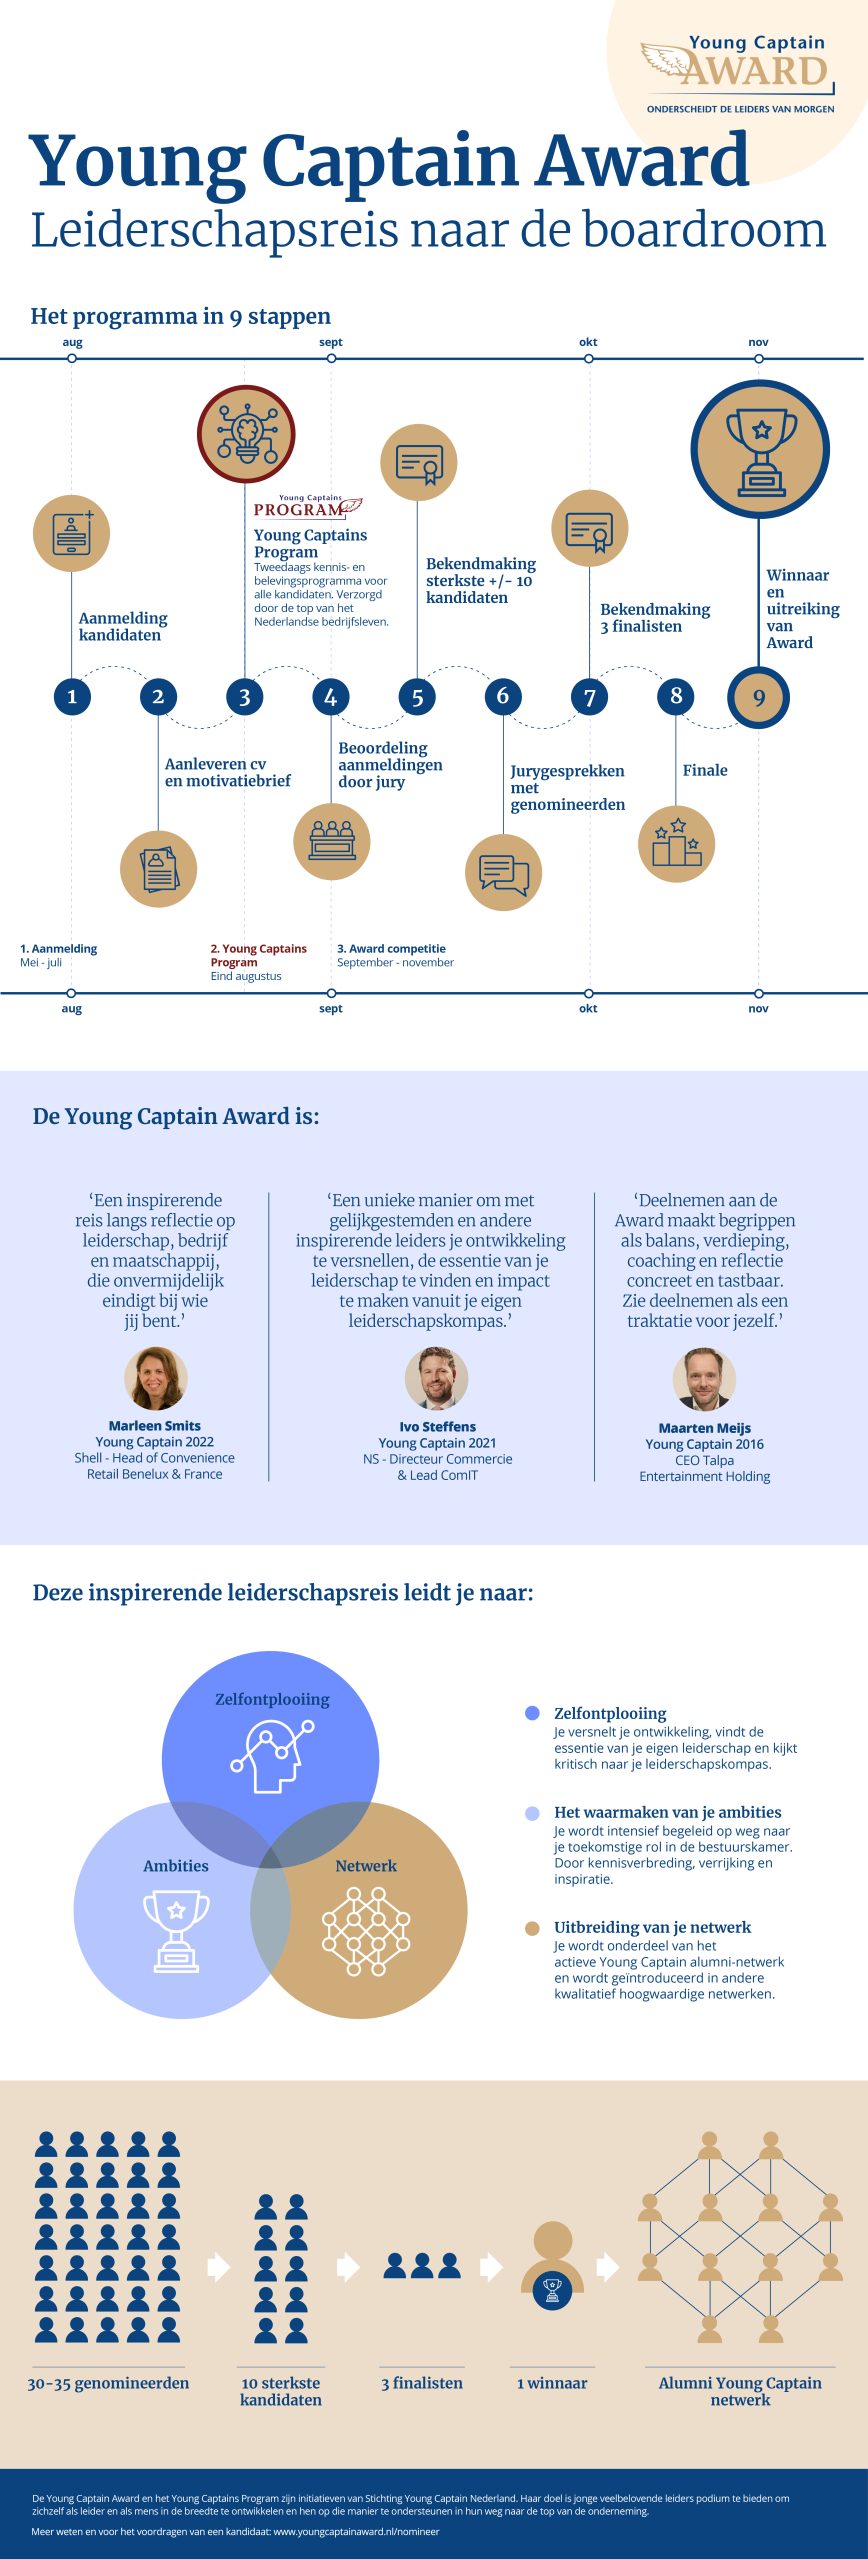 Infographic Leiderschapsreis Young Captain Award